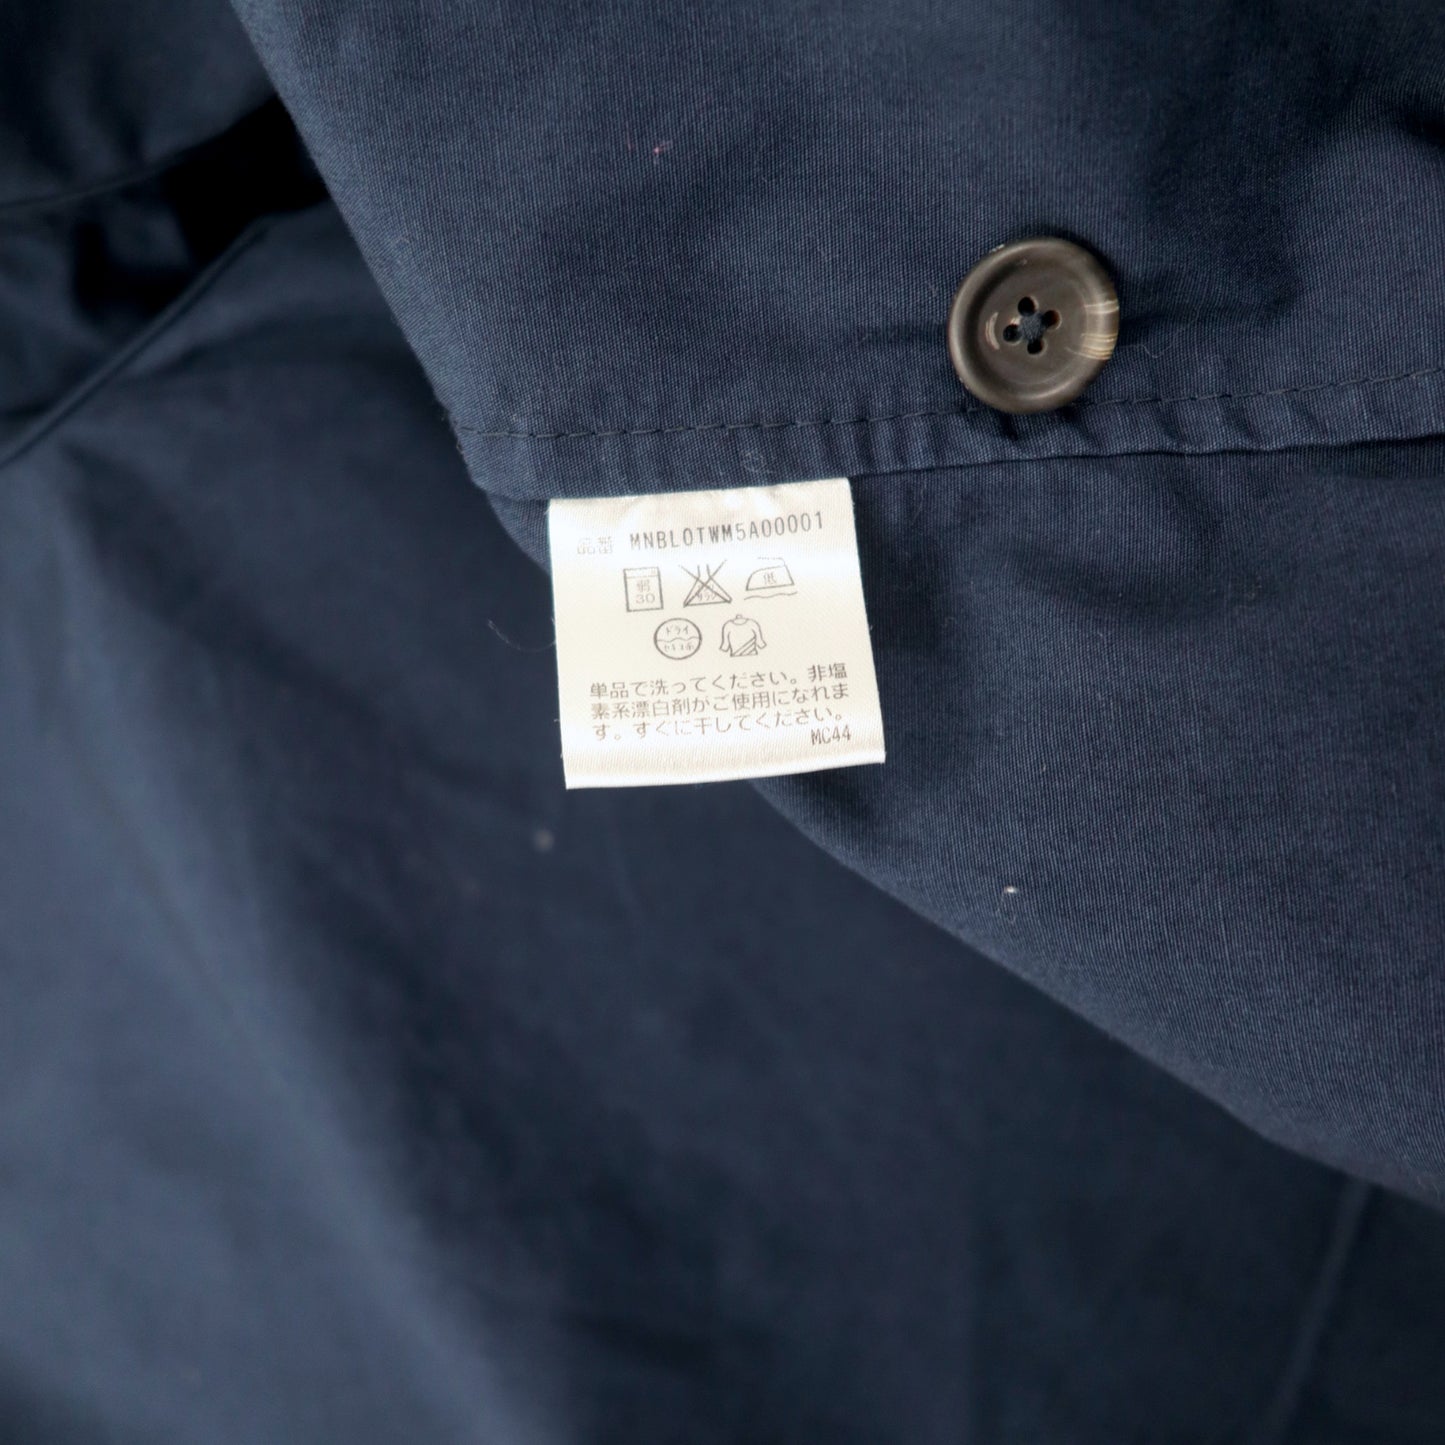 Polo by Ralph Lauren スウィングトップ ハリントンジャケット XL ネイビー コットン スモールポニー刺繍